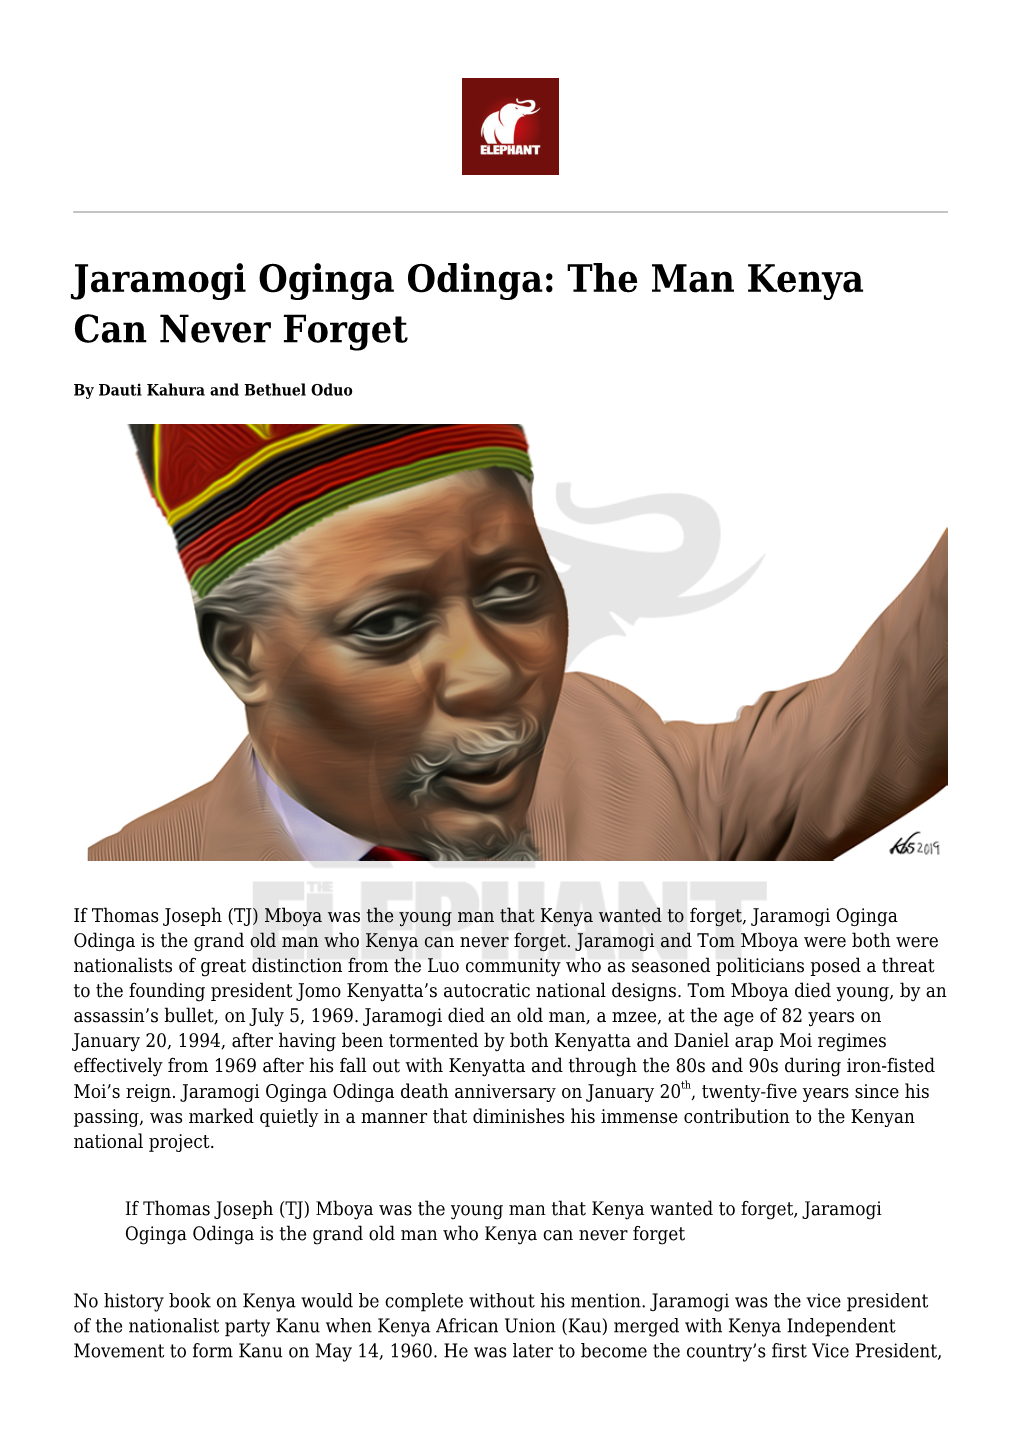 Jaramogi Oginga Odinga: the Man Kenya Can Never Forget